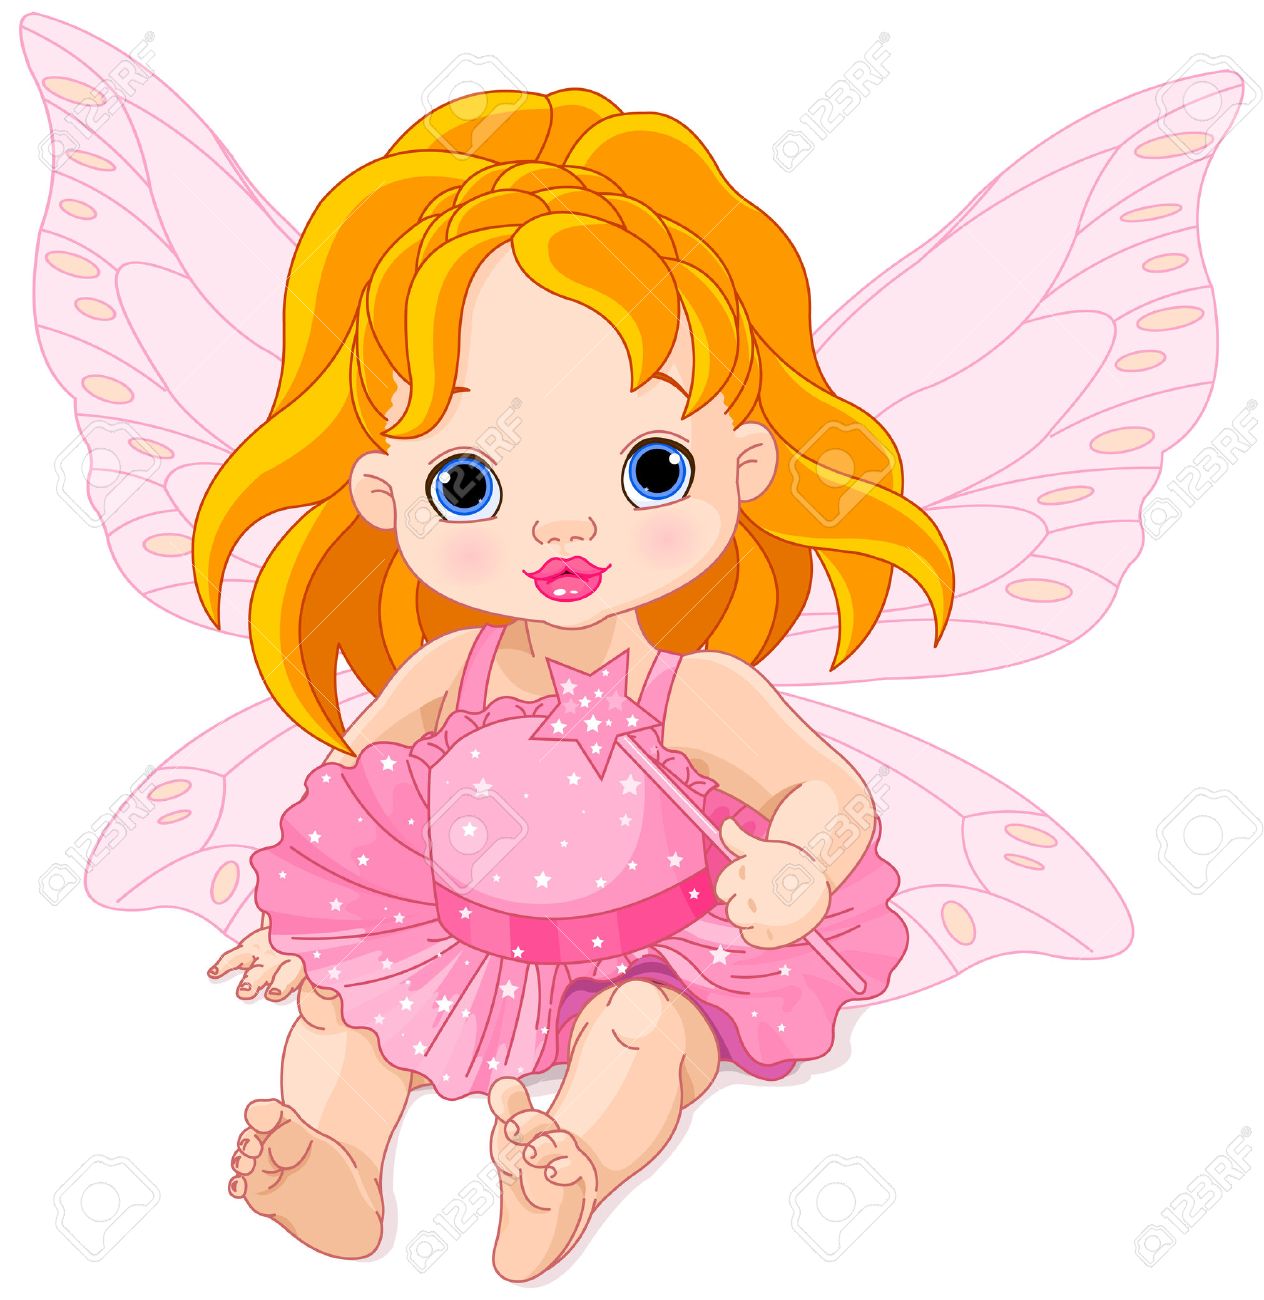 Illustration of cute baby fairy.